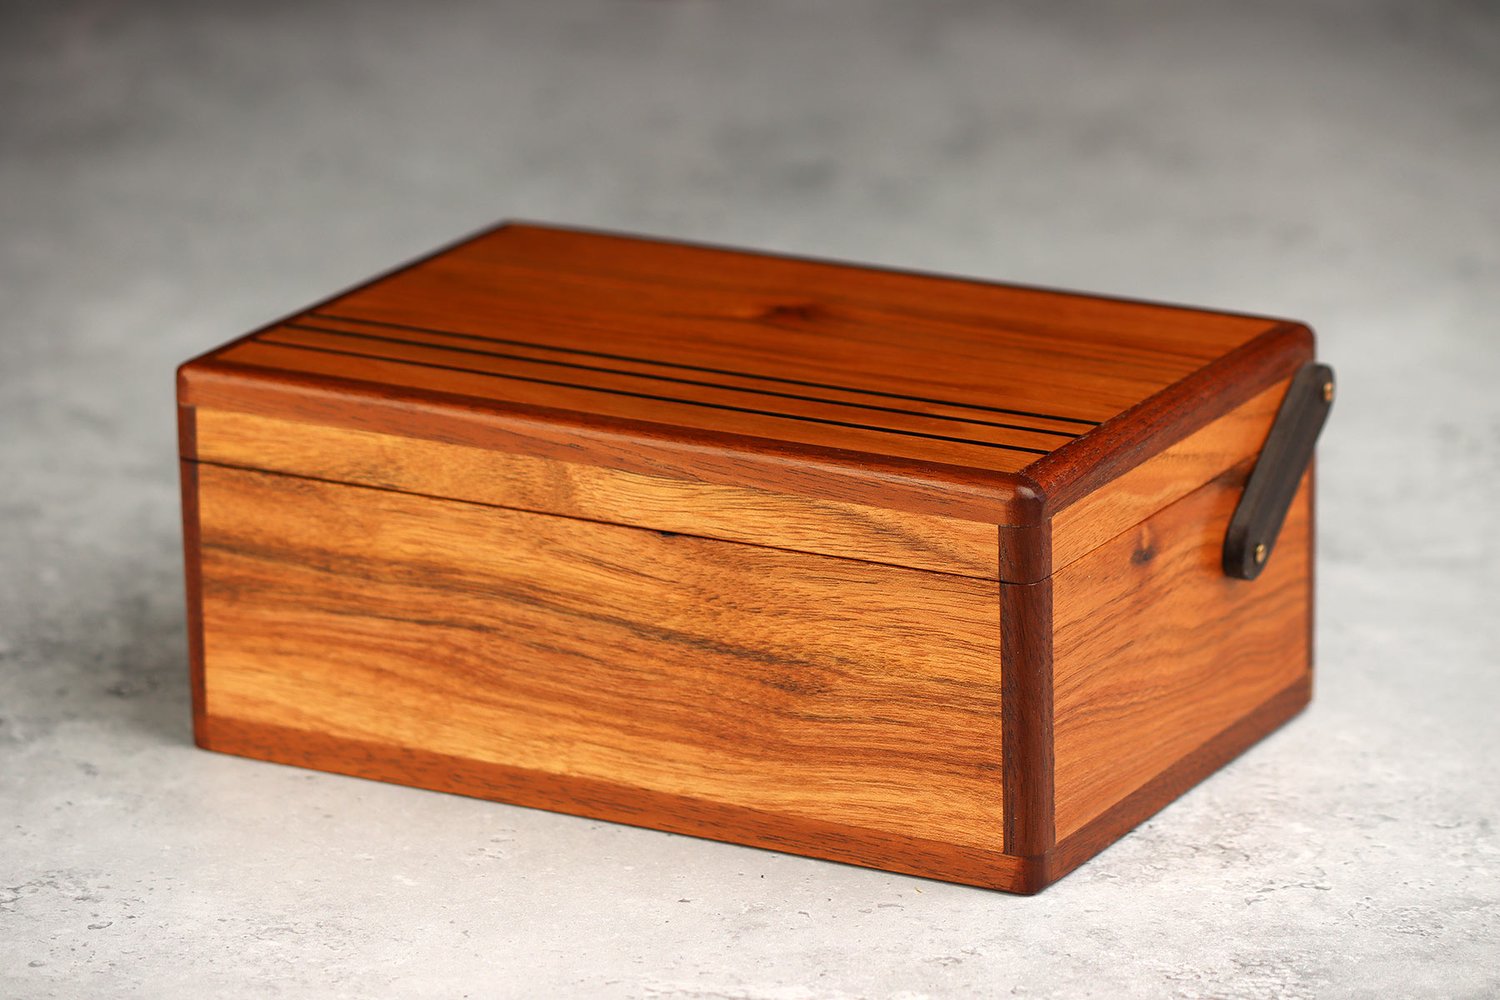 Small Wood Boxes or Decorative Keepsake Boxes